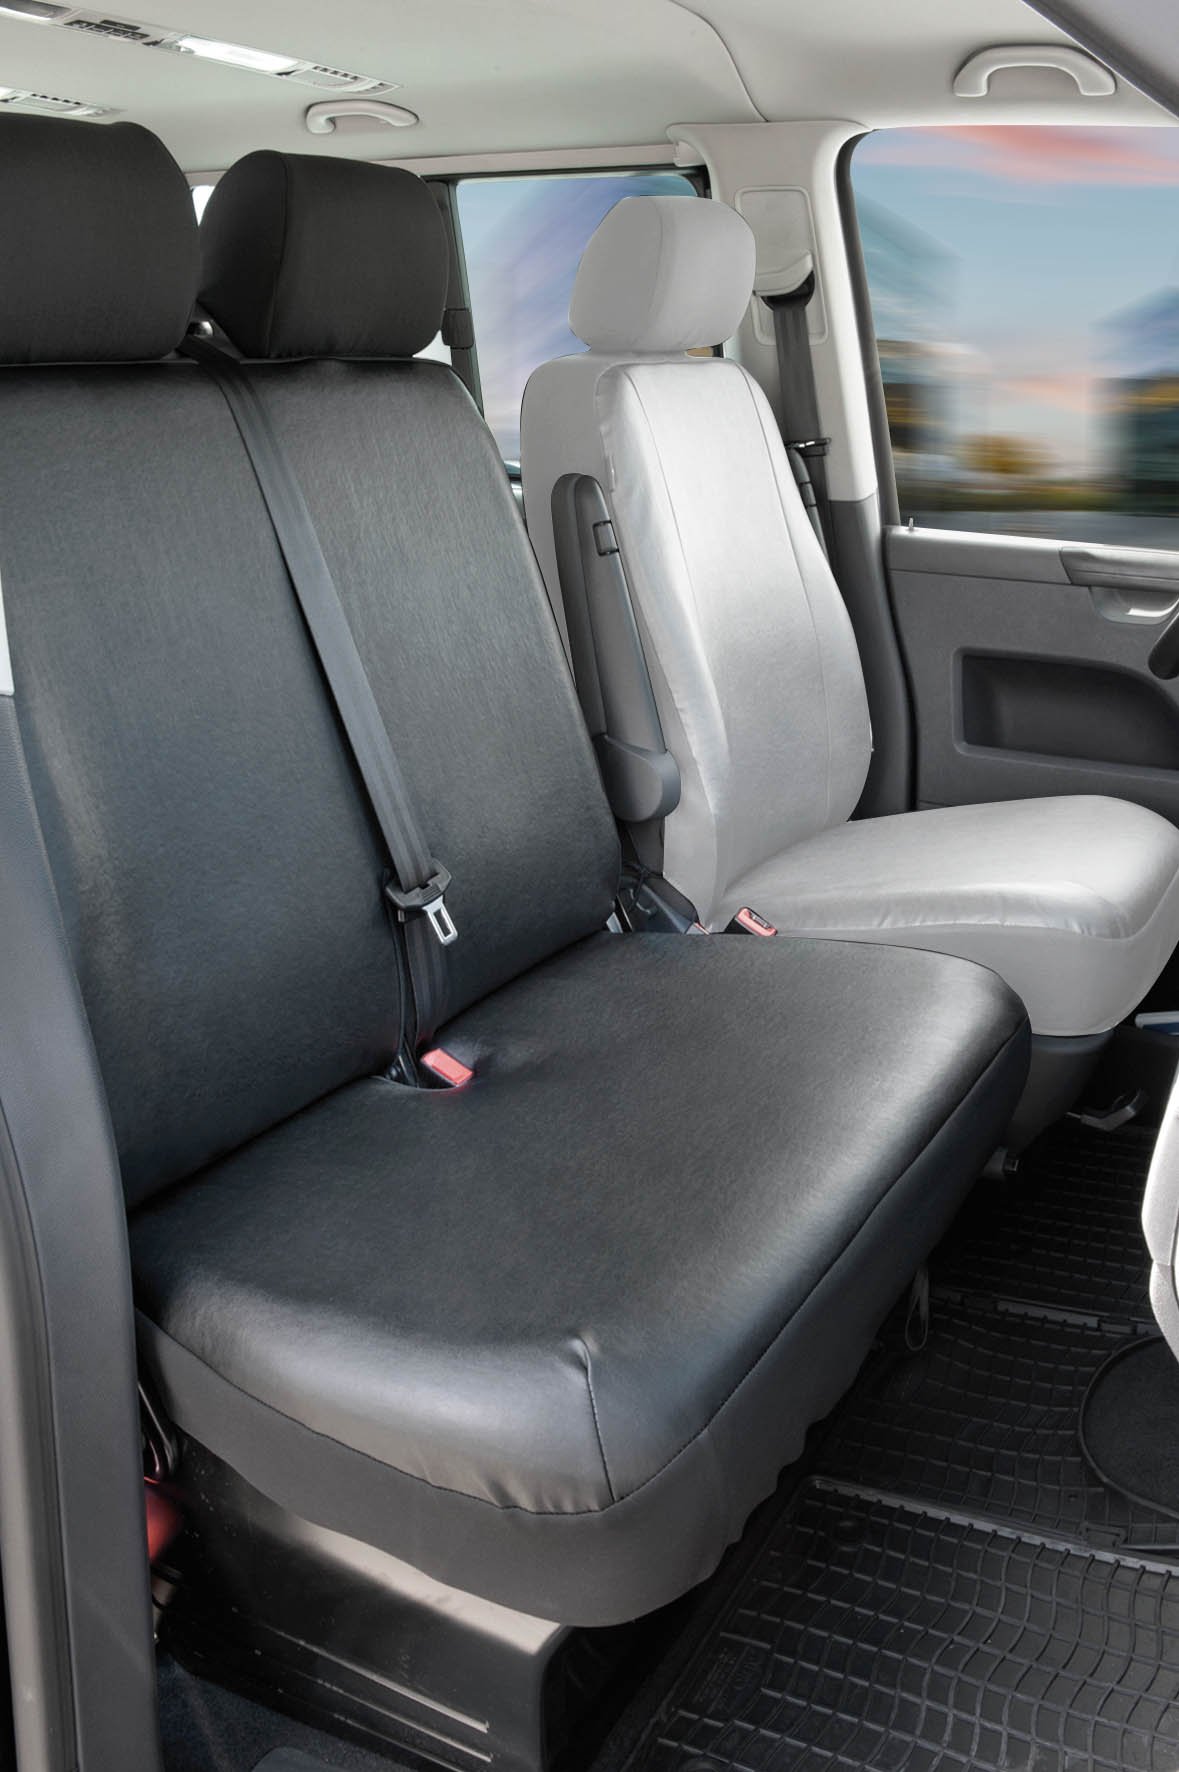 Passform Sitzbezug aus Kunstleder kompatibel mit VW T4, Doppelbank vorne